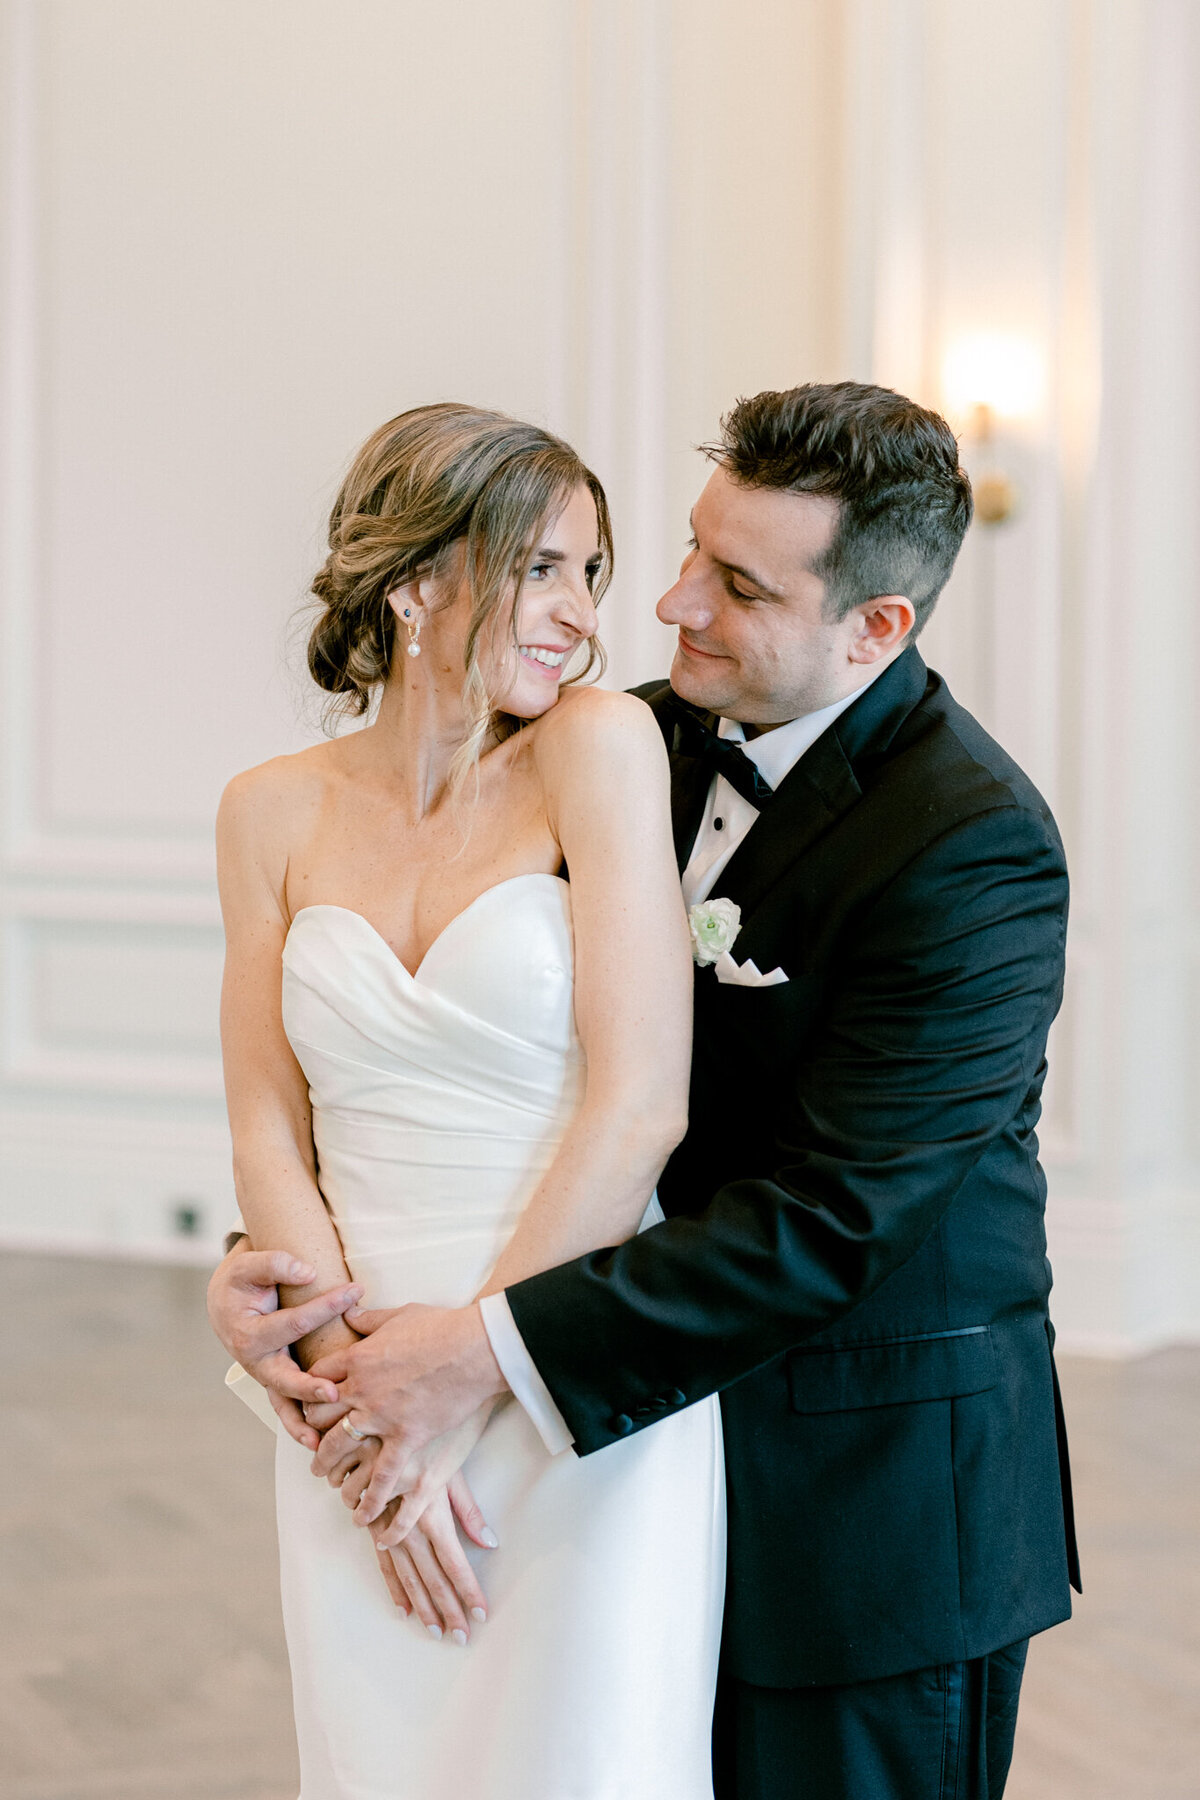 Virginia & Michael's Wedding at the Adolphus Hotel | Dallas Wedding Photographer | Sami Kathryn Photography-175